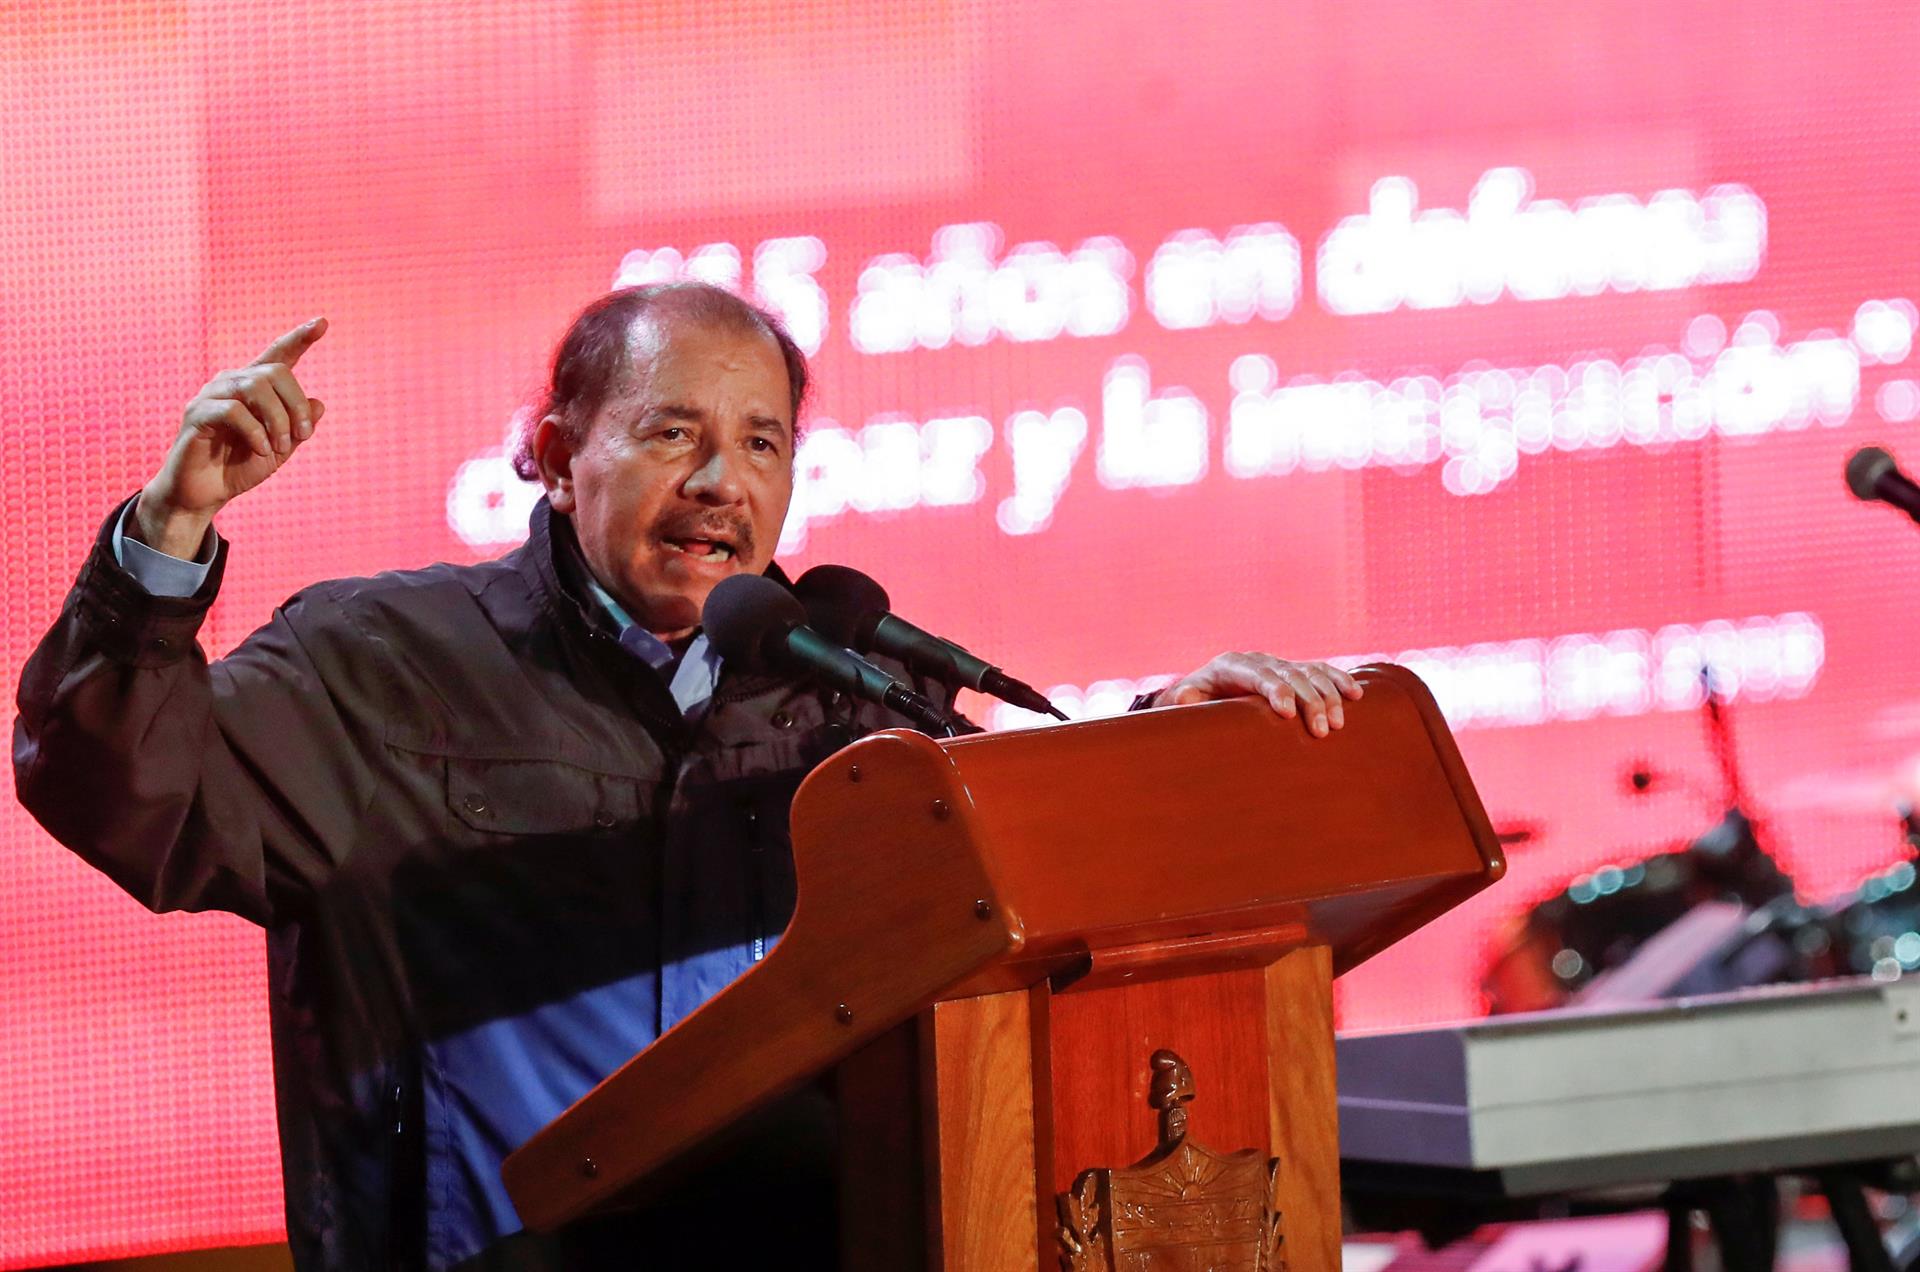 Archivo del presidente de Nicaragua, Daniel Ortega